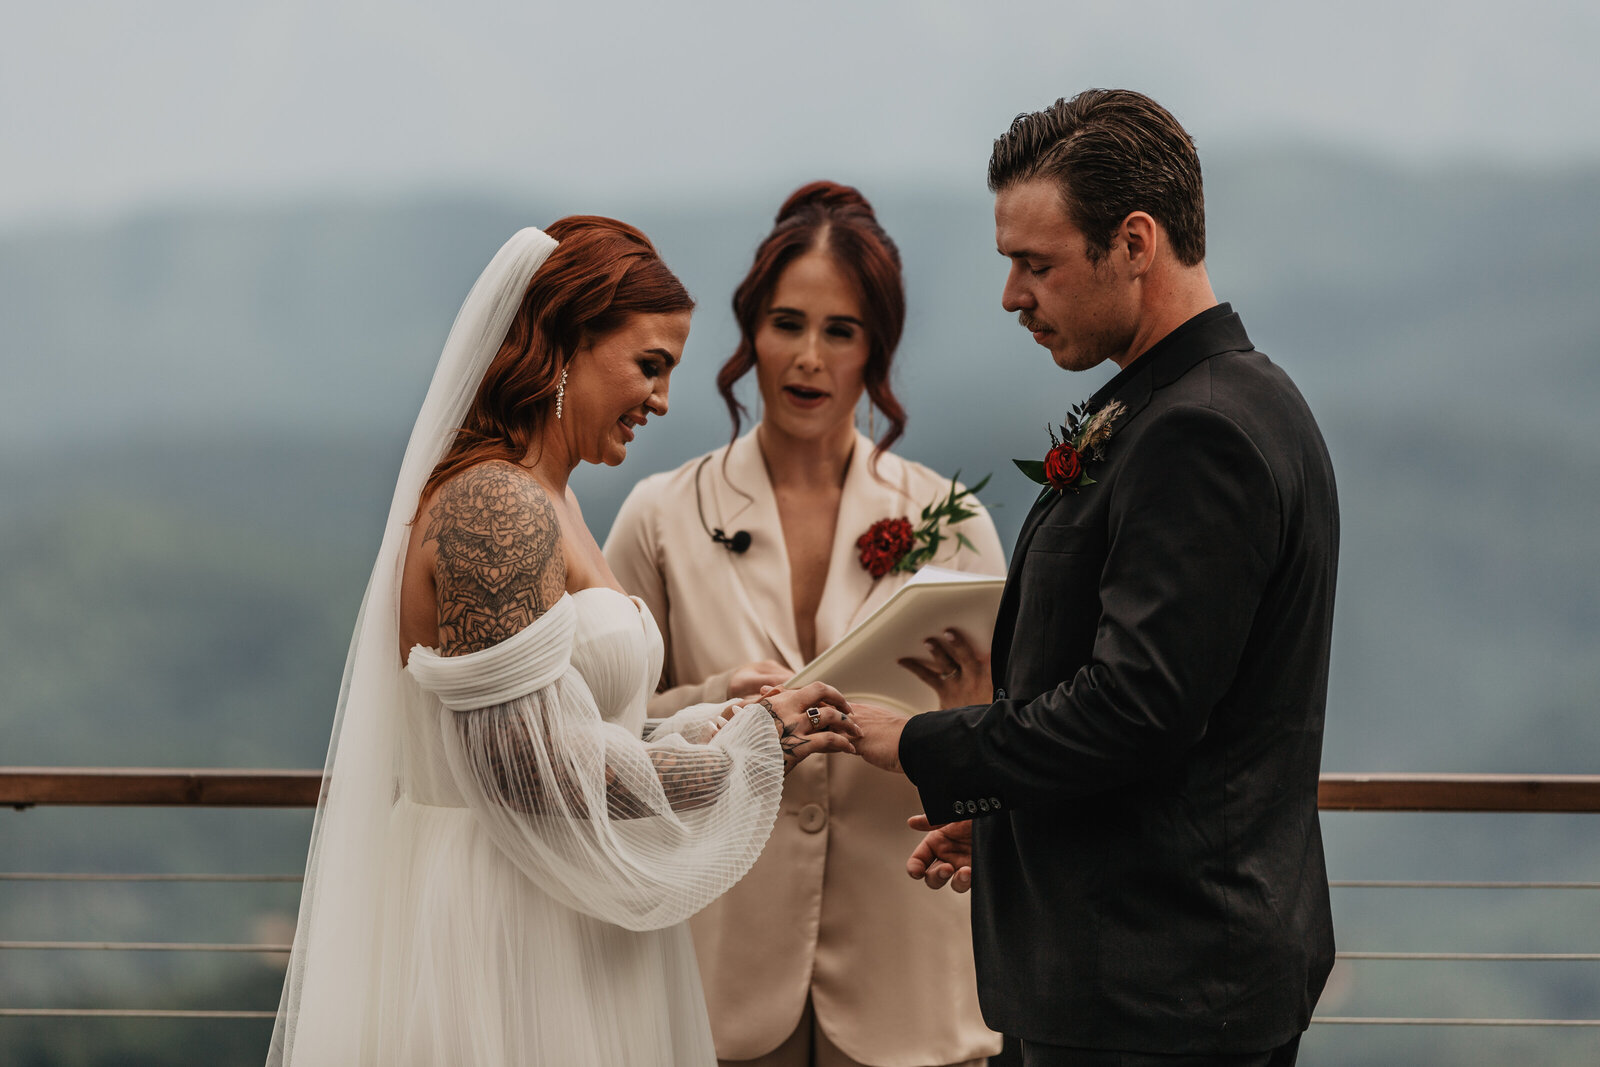 The Trillium Venue | Smoky Mountain Wedding Photographer